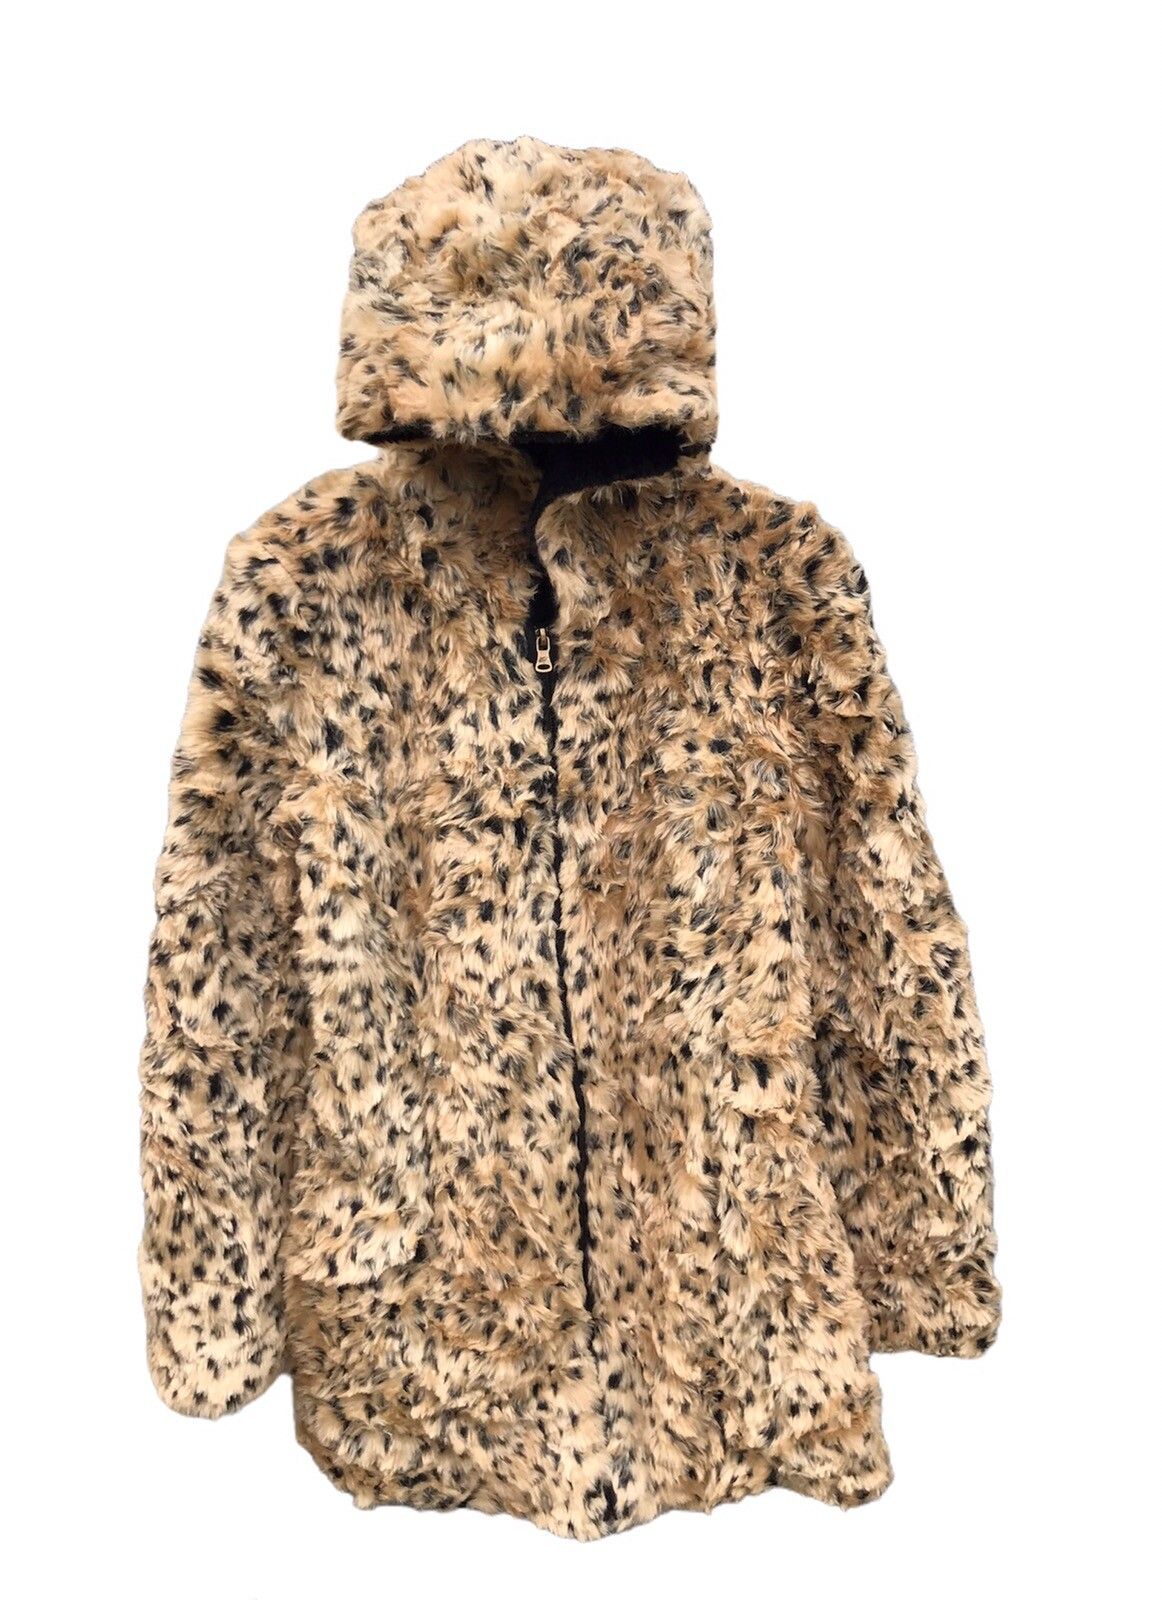 Zara Zara leopard fur jacket hoodie | Grailed